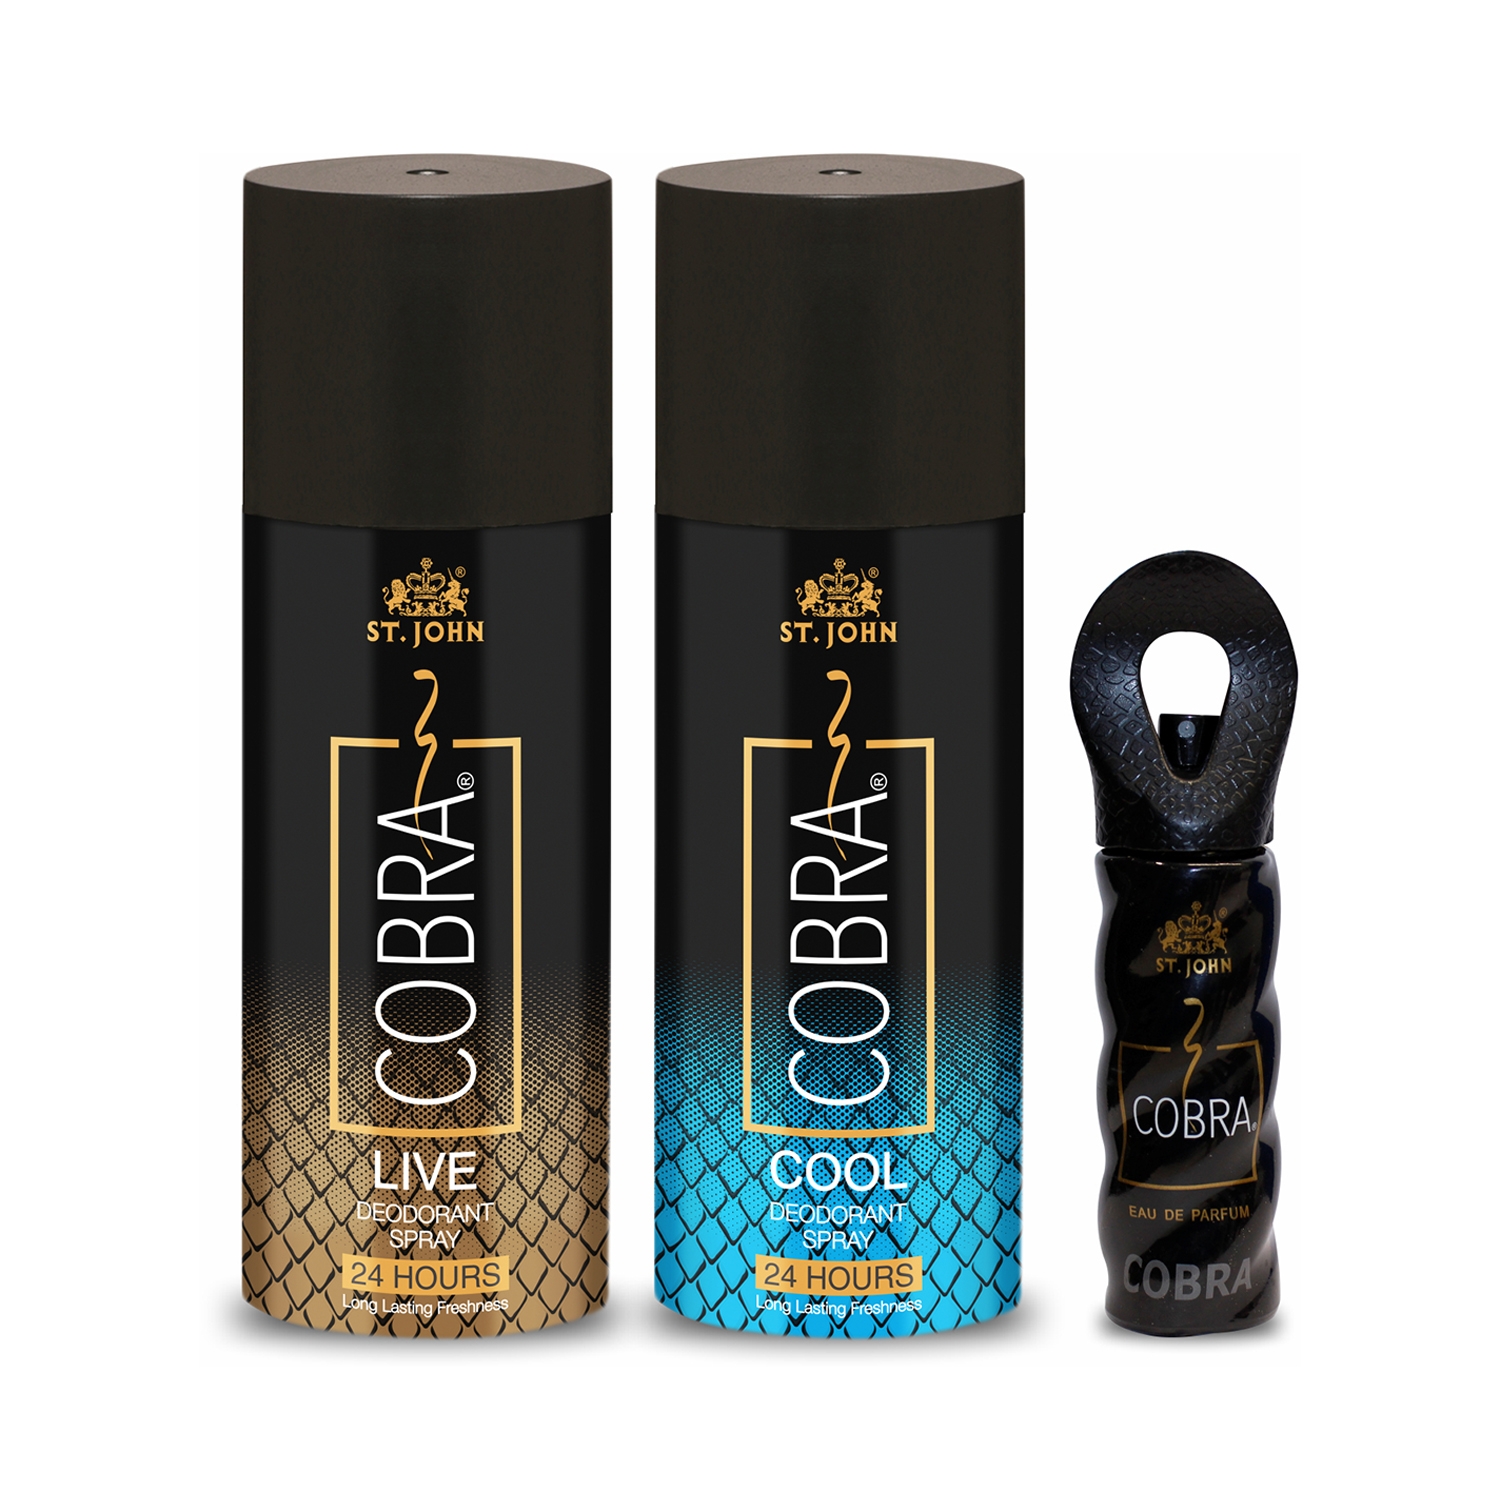 ST.JOHN Cobra Cool, Live Limited Edition Deodorant Spray & Cobra Eau De Parfum (3 Pcs)